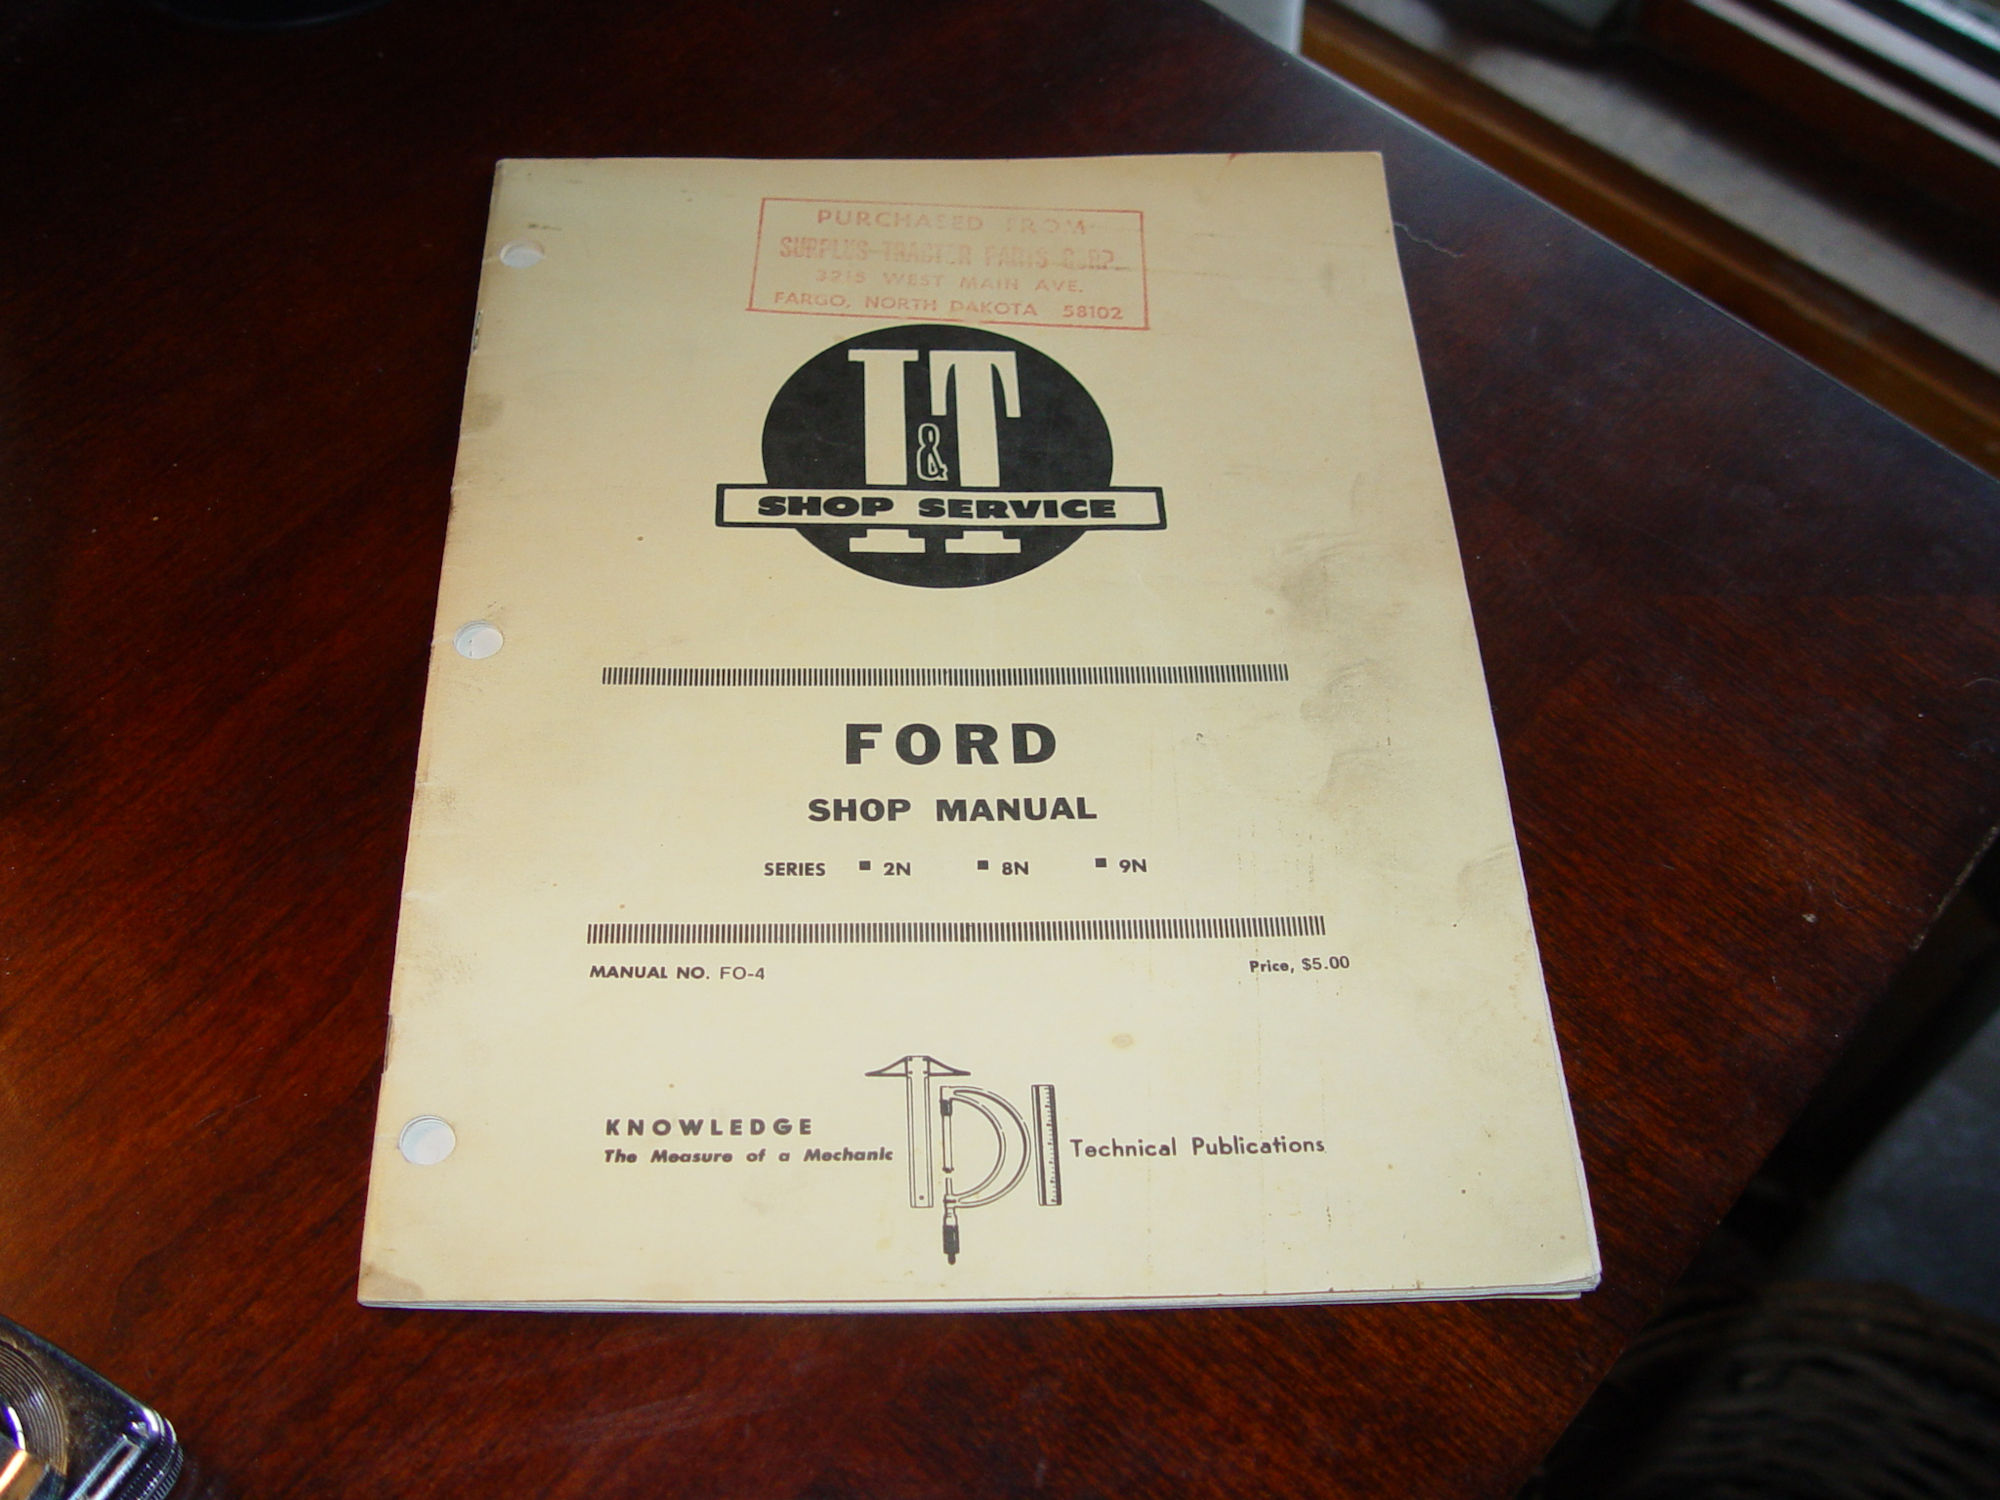 1953 Ford
                        Tractor Shop Manual 2N, 8N, 9N, (Manual No.
                        FO-4)